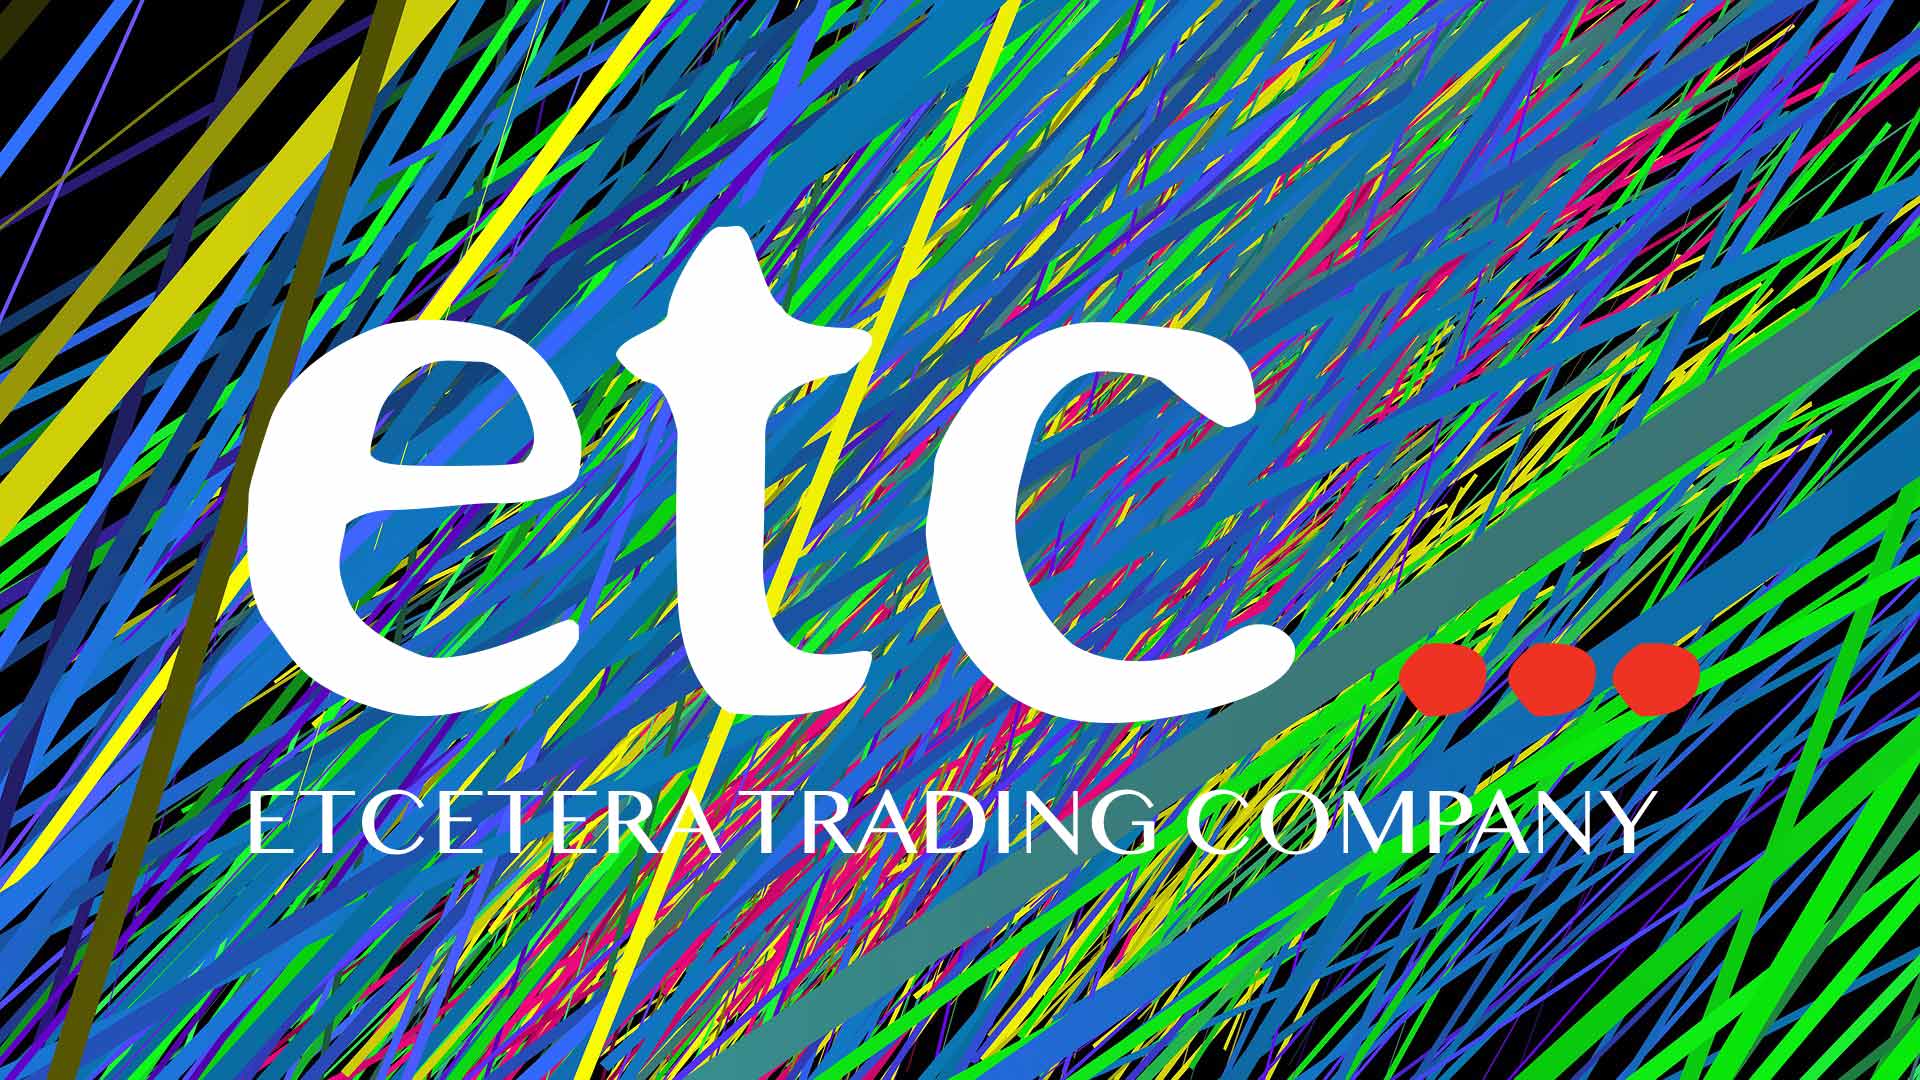 etcetera trading company